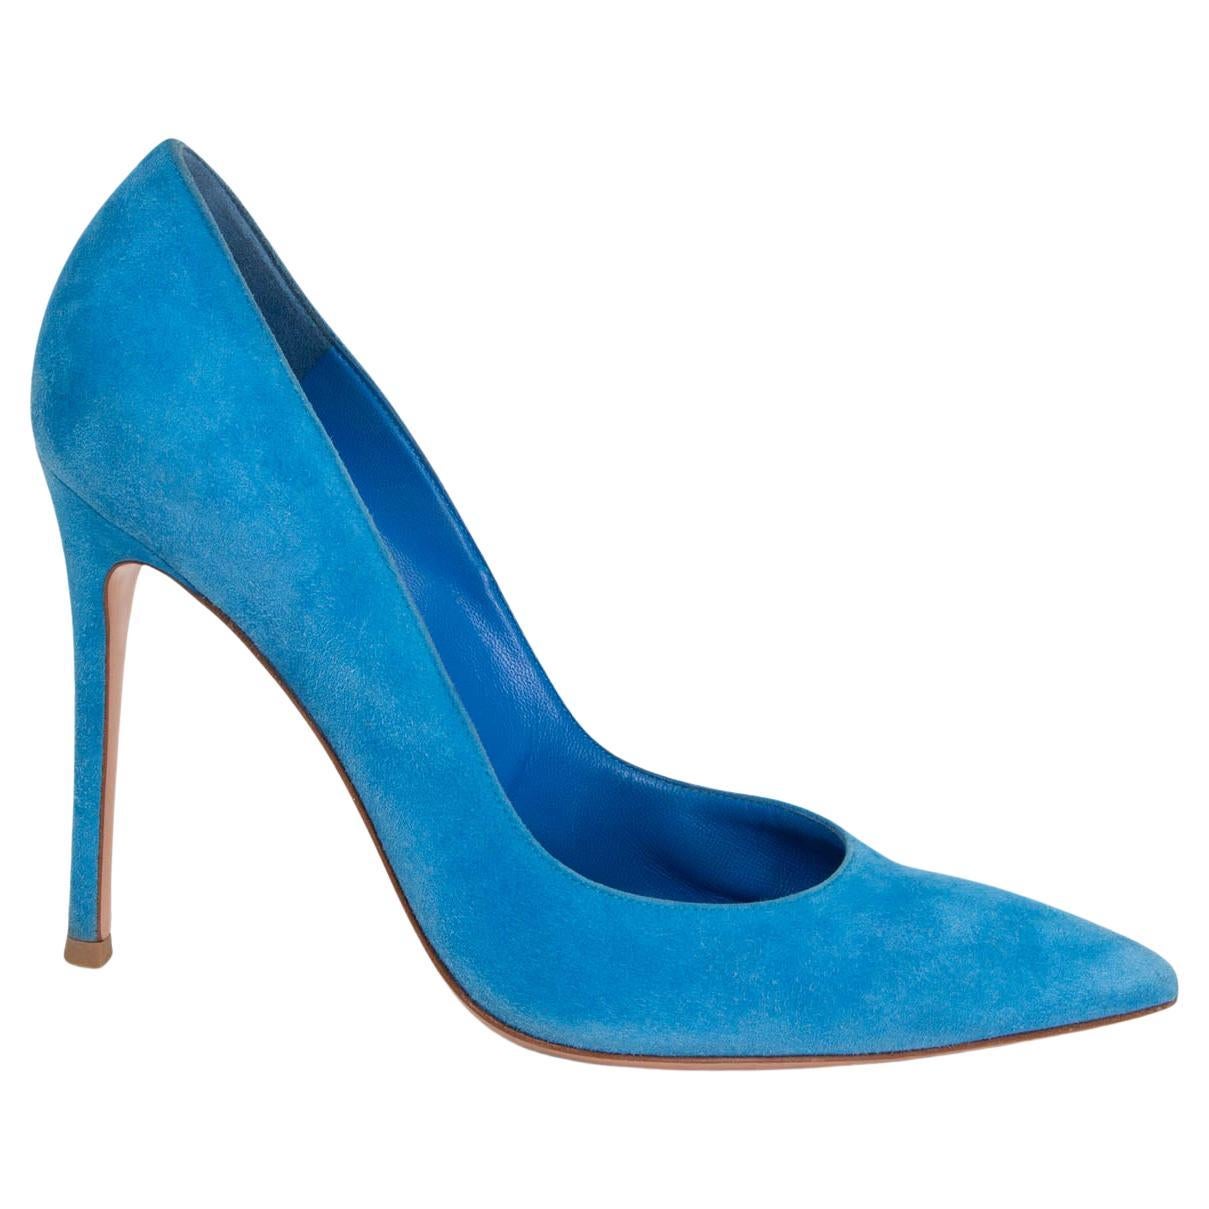 Chaussures à talons GIANTVITO ROSSI 105 en daim bleu azur GIANVITO, taille 38